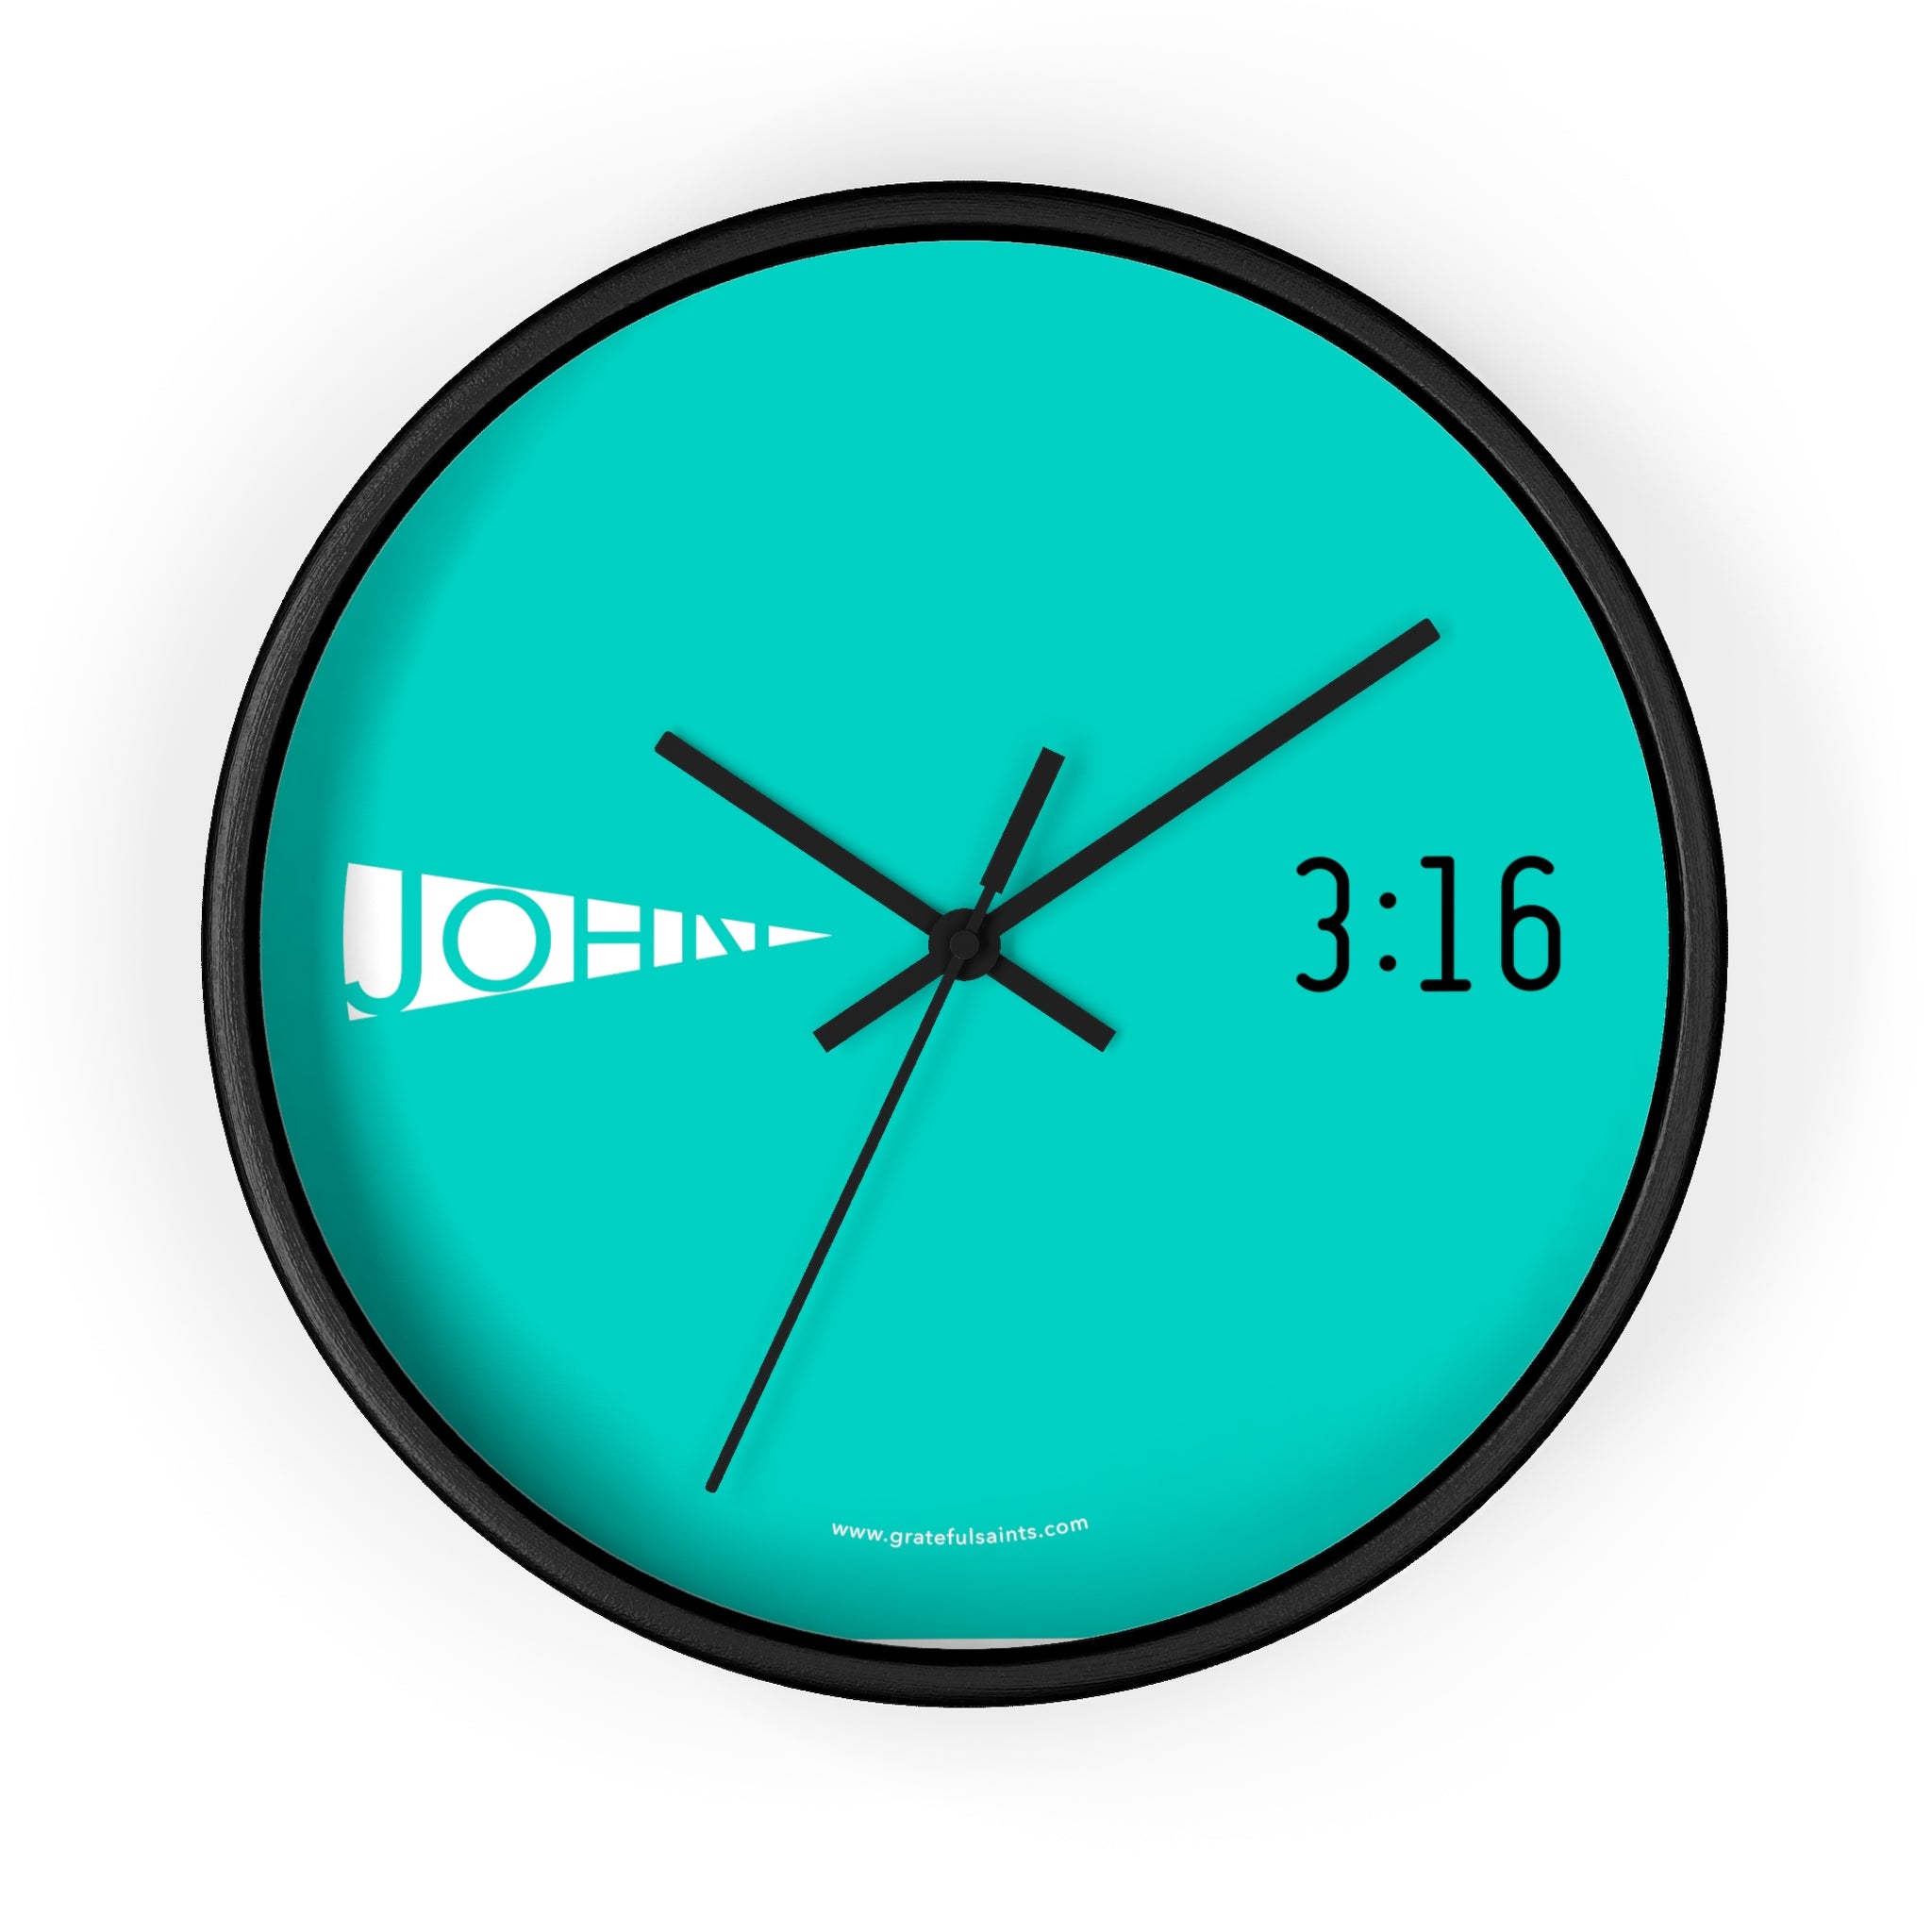 John 3:16 Wall Clock Turquoise